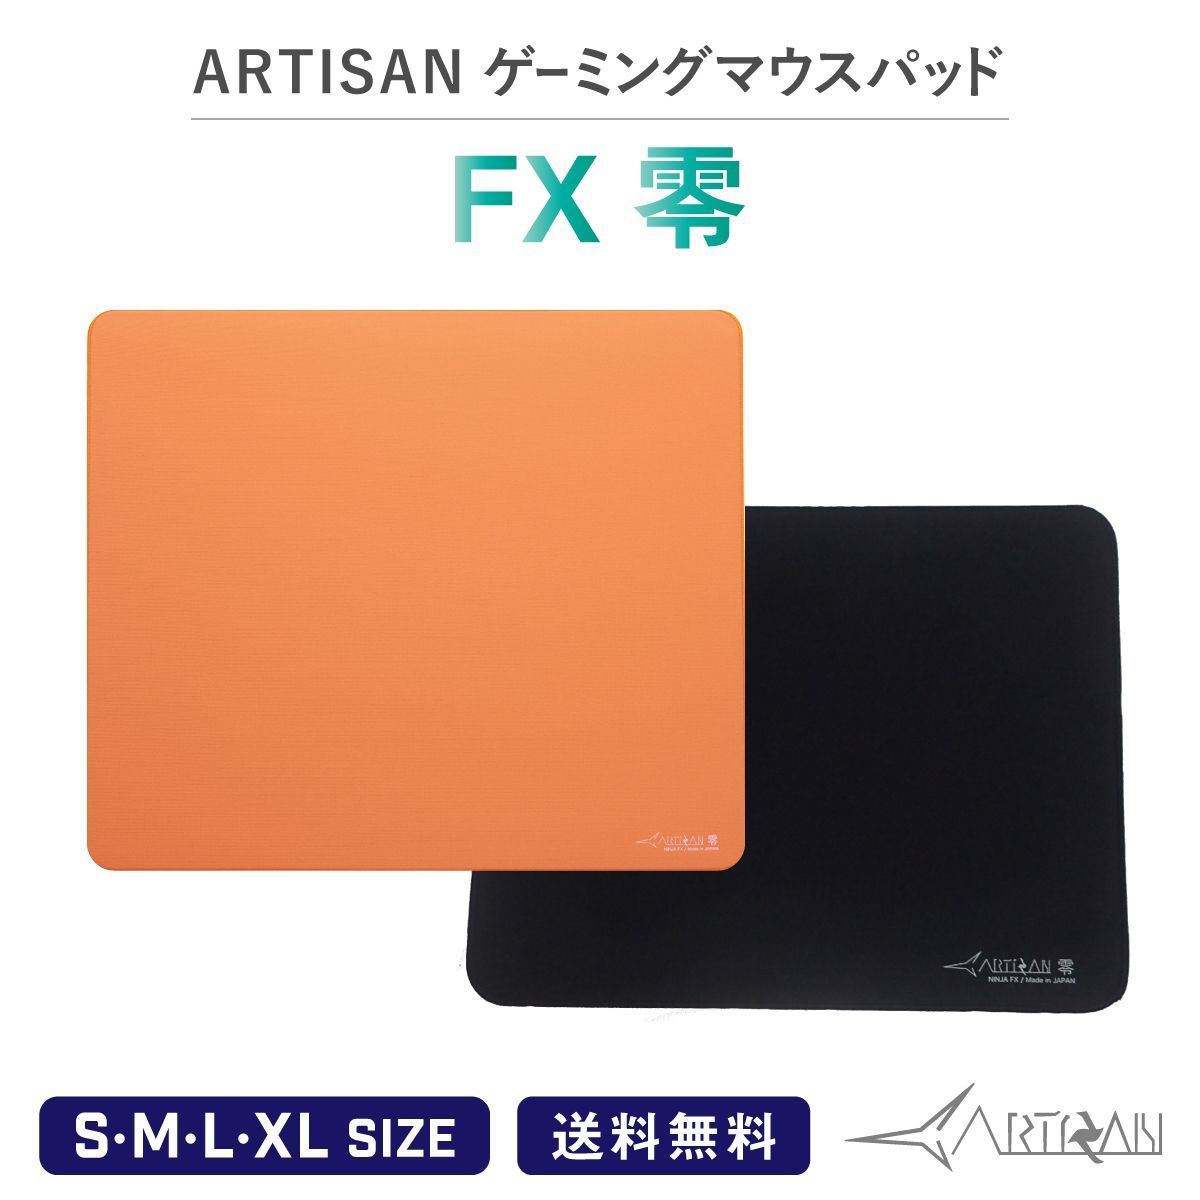 ARTISAN シデンカイv2 XL MID 橙 - PC周辺機器